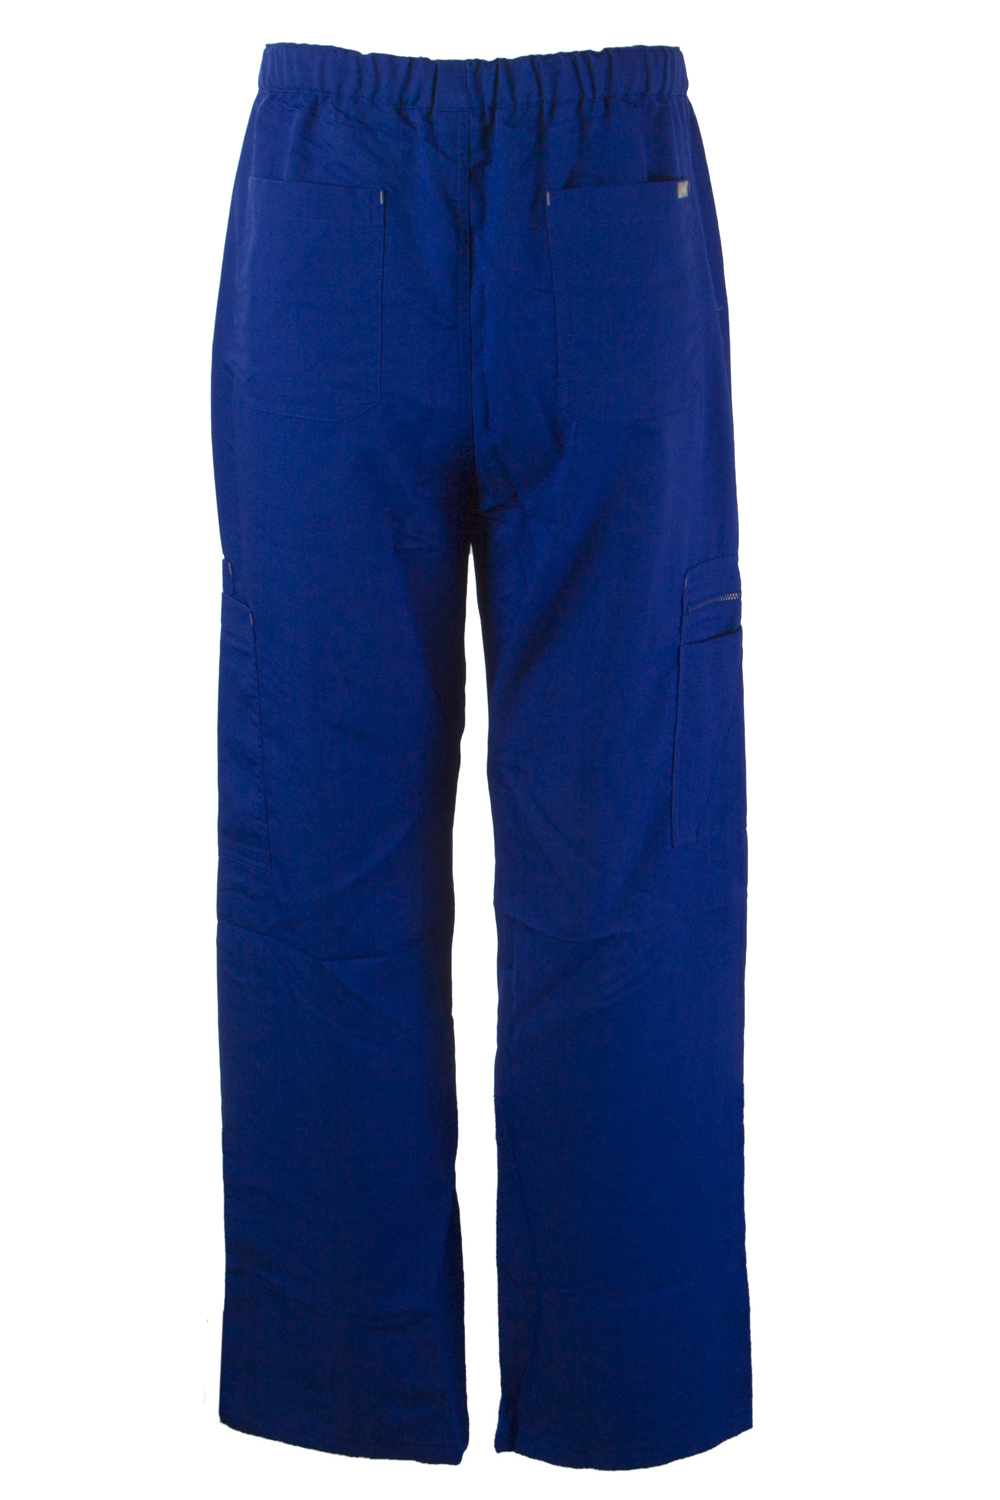 FIGS Men's Tela Cargo Scrub Pants PM5900 $46 NWT | eBay